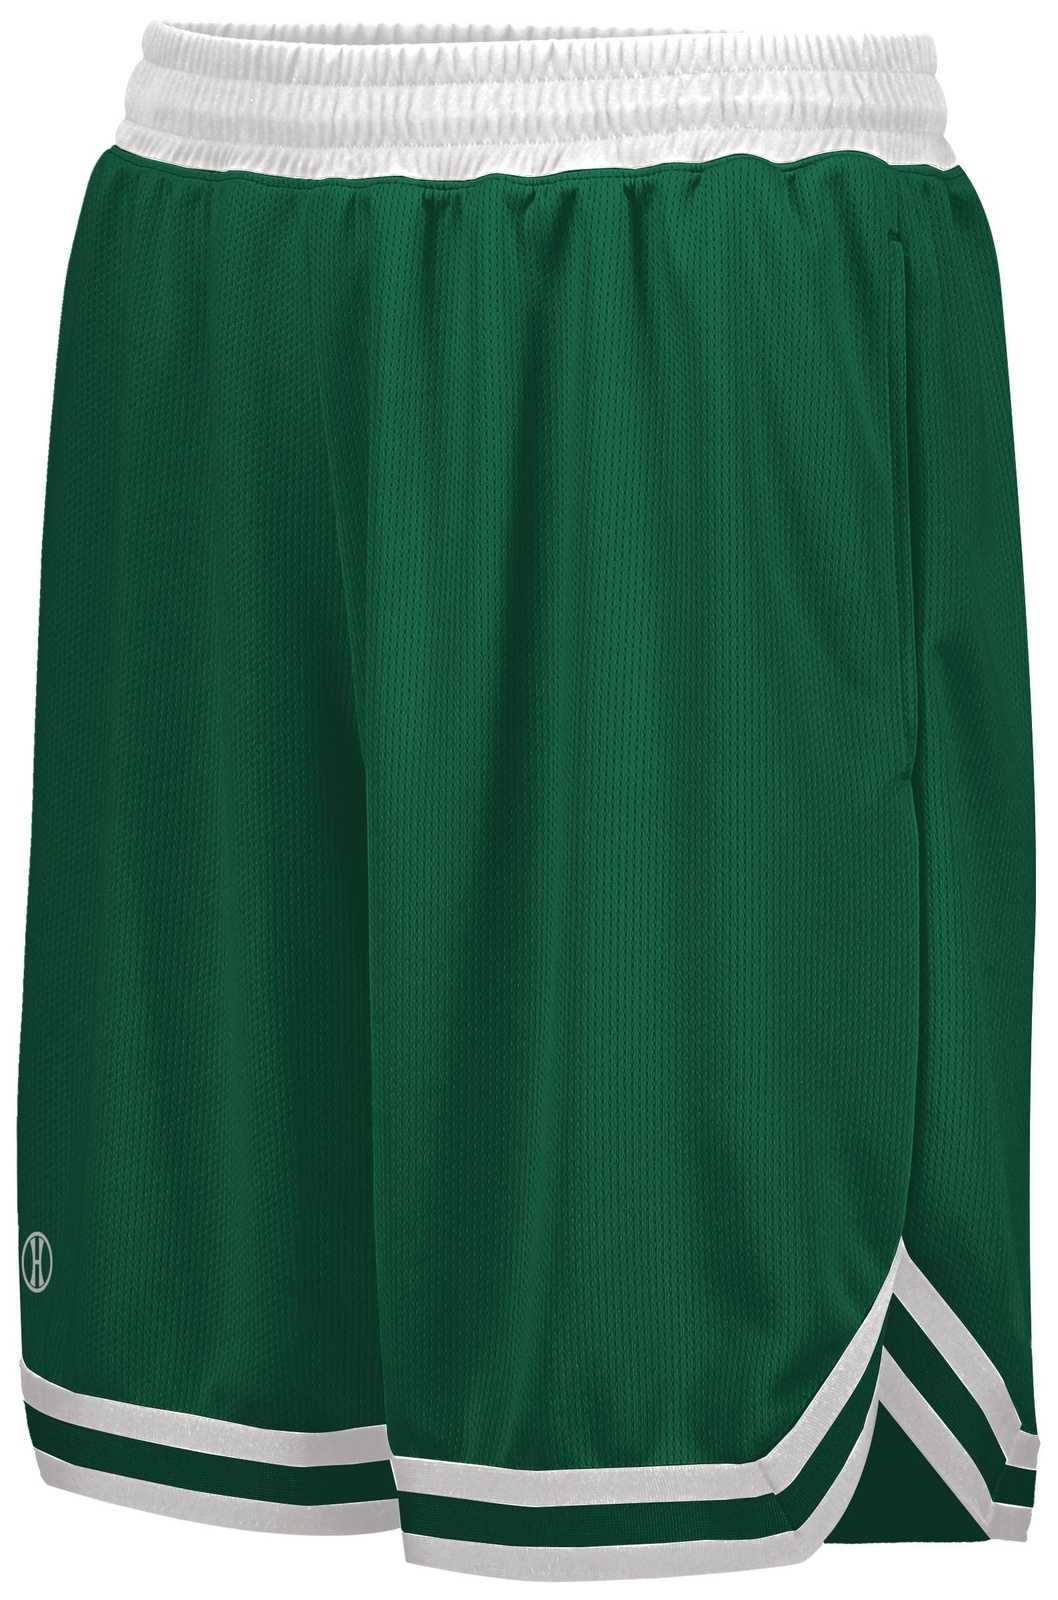 Holloway 229526 Retro Trainer Shorts - Dark Green White - HIT a Double